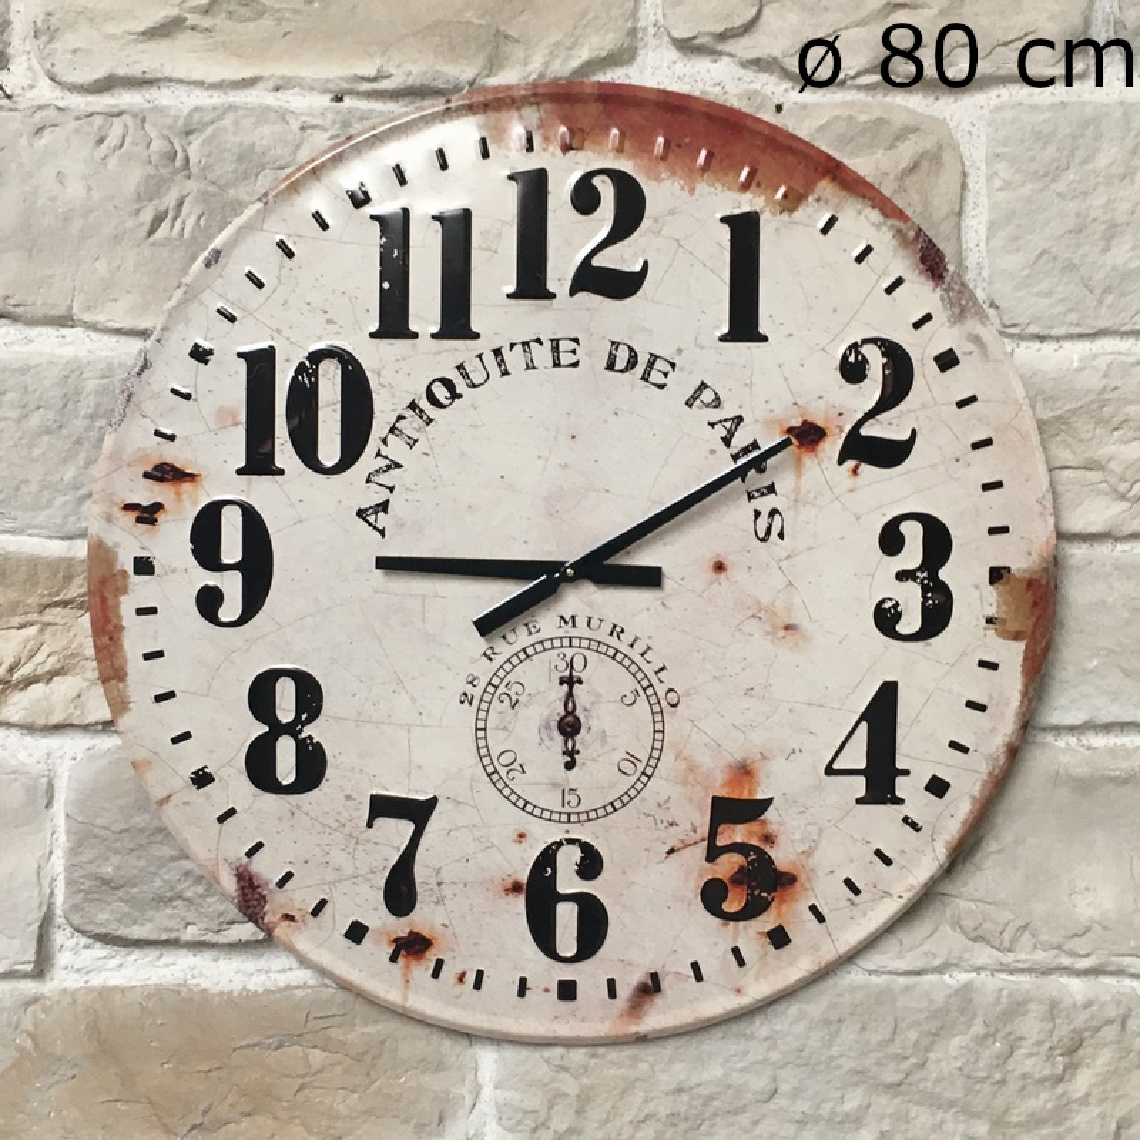 L'Originale Deco - Grande Horloge Industrielle Campagne Horloge Metal Fer ø80 cm - Horloges, pendules